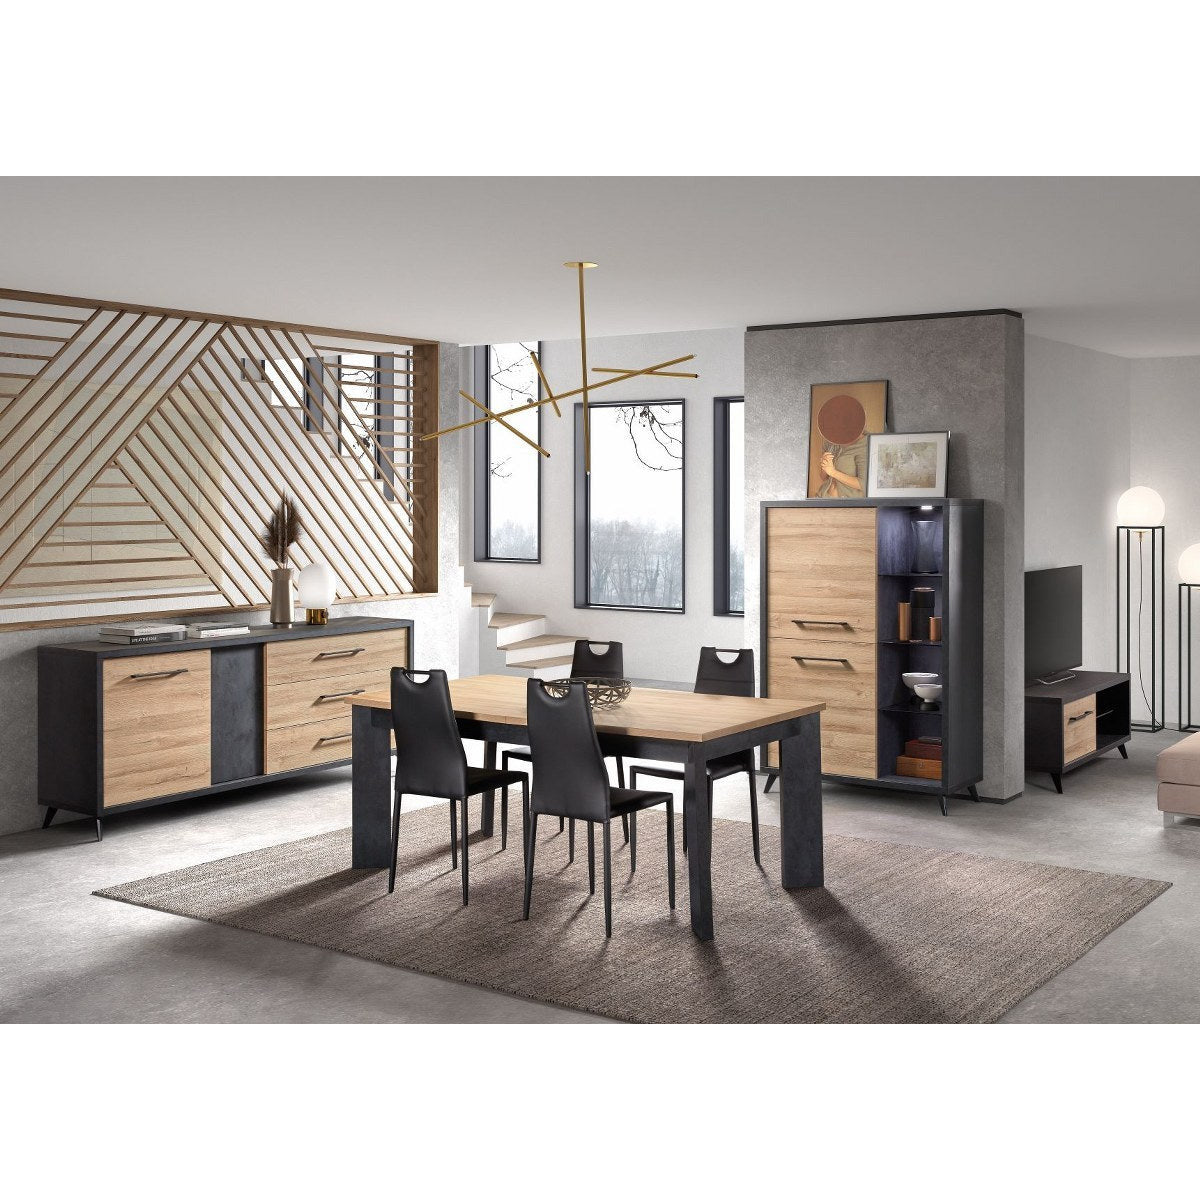 Wall cabinet | Furniture series Moulin | Natural, black | 110x50x